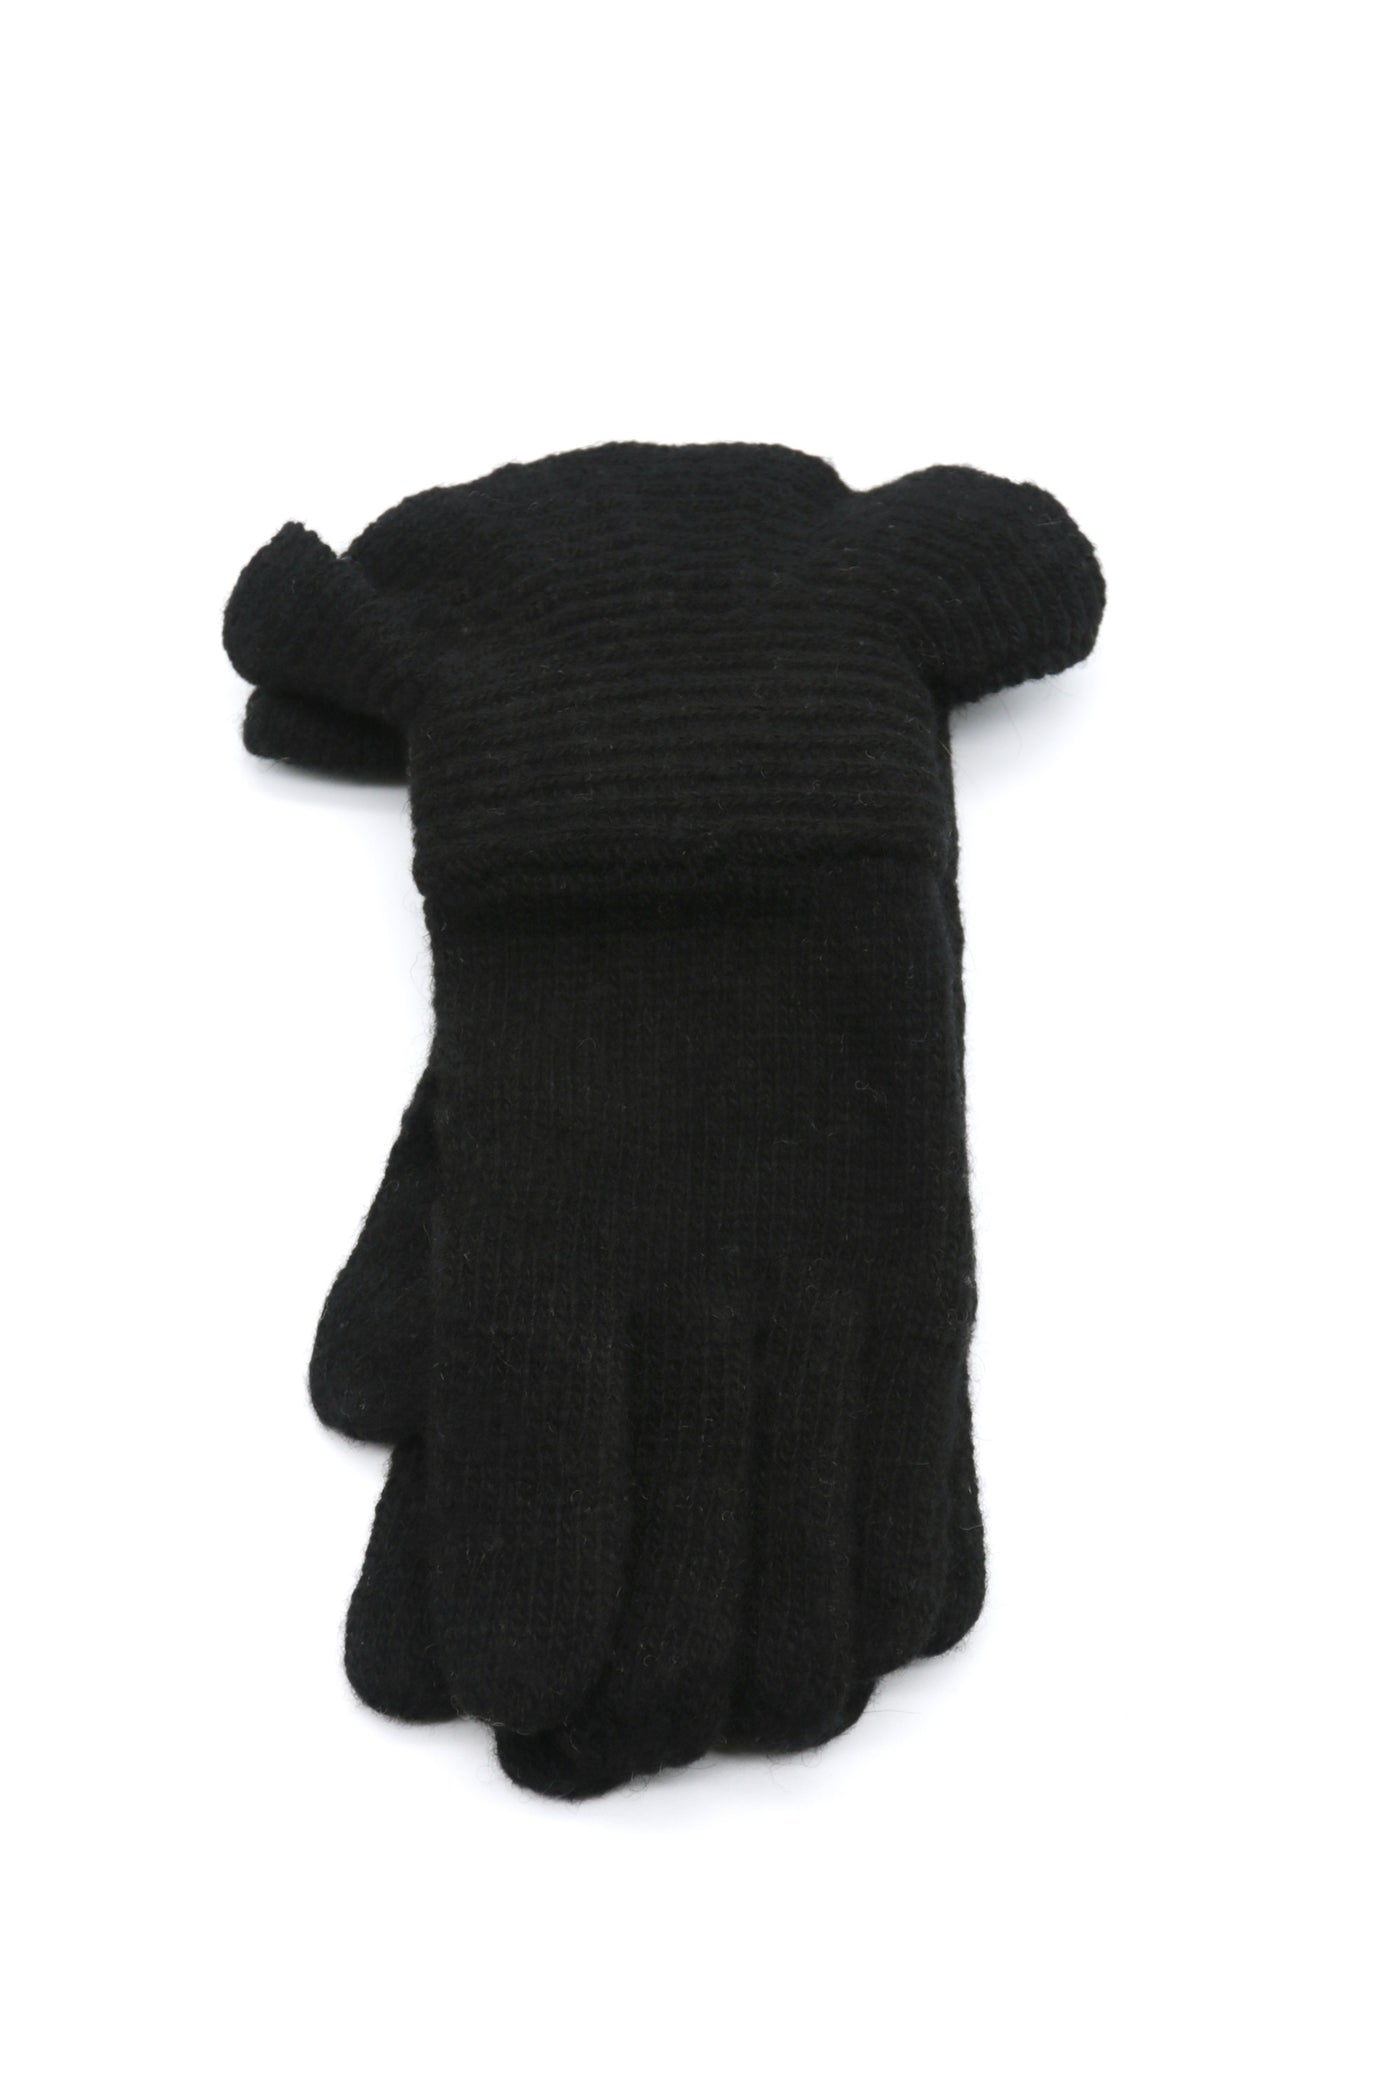 storets.com Gloria Ruffled Cuff Knit Gloves